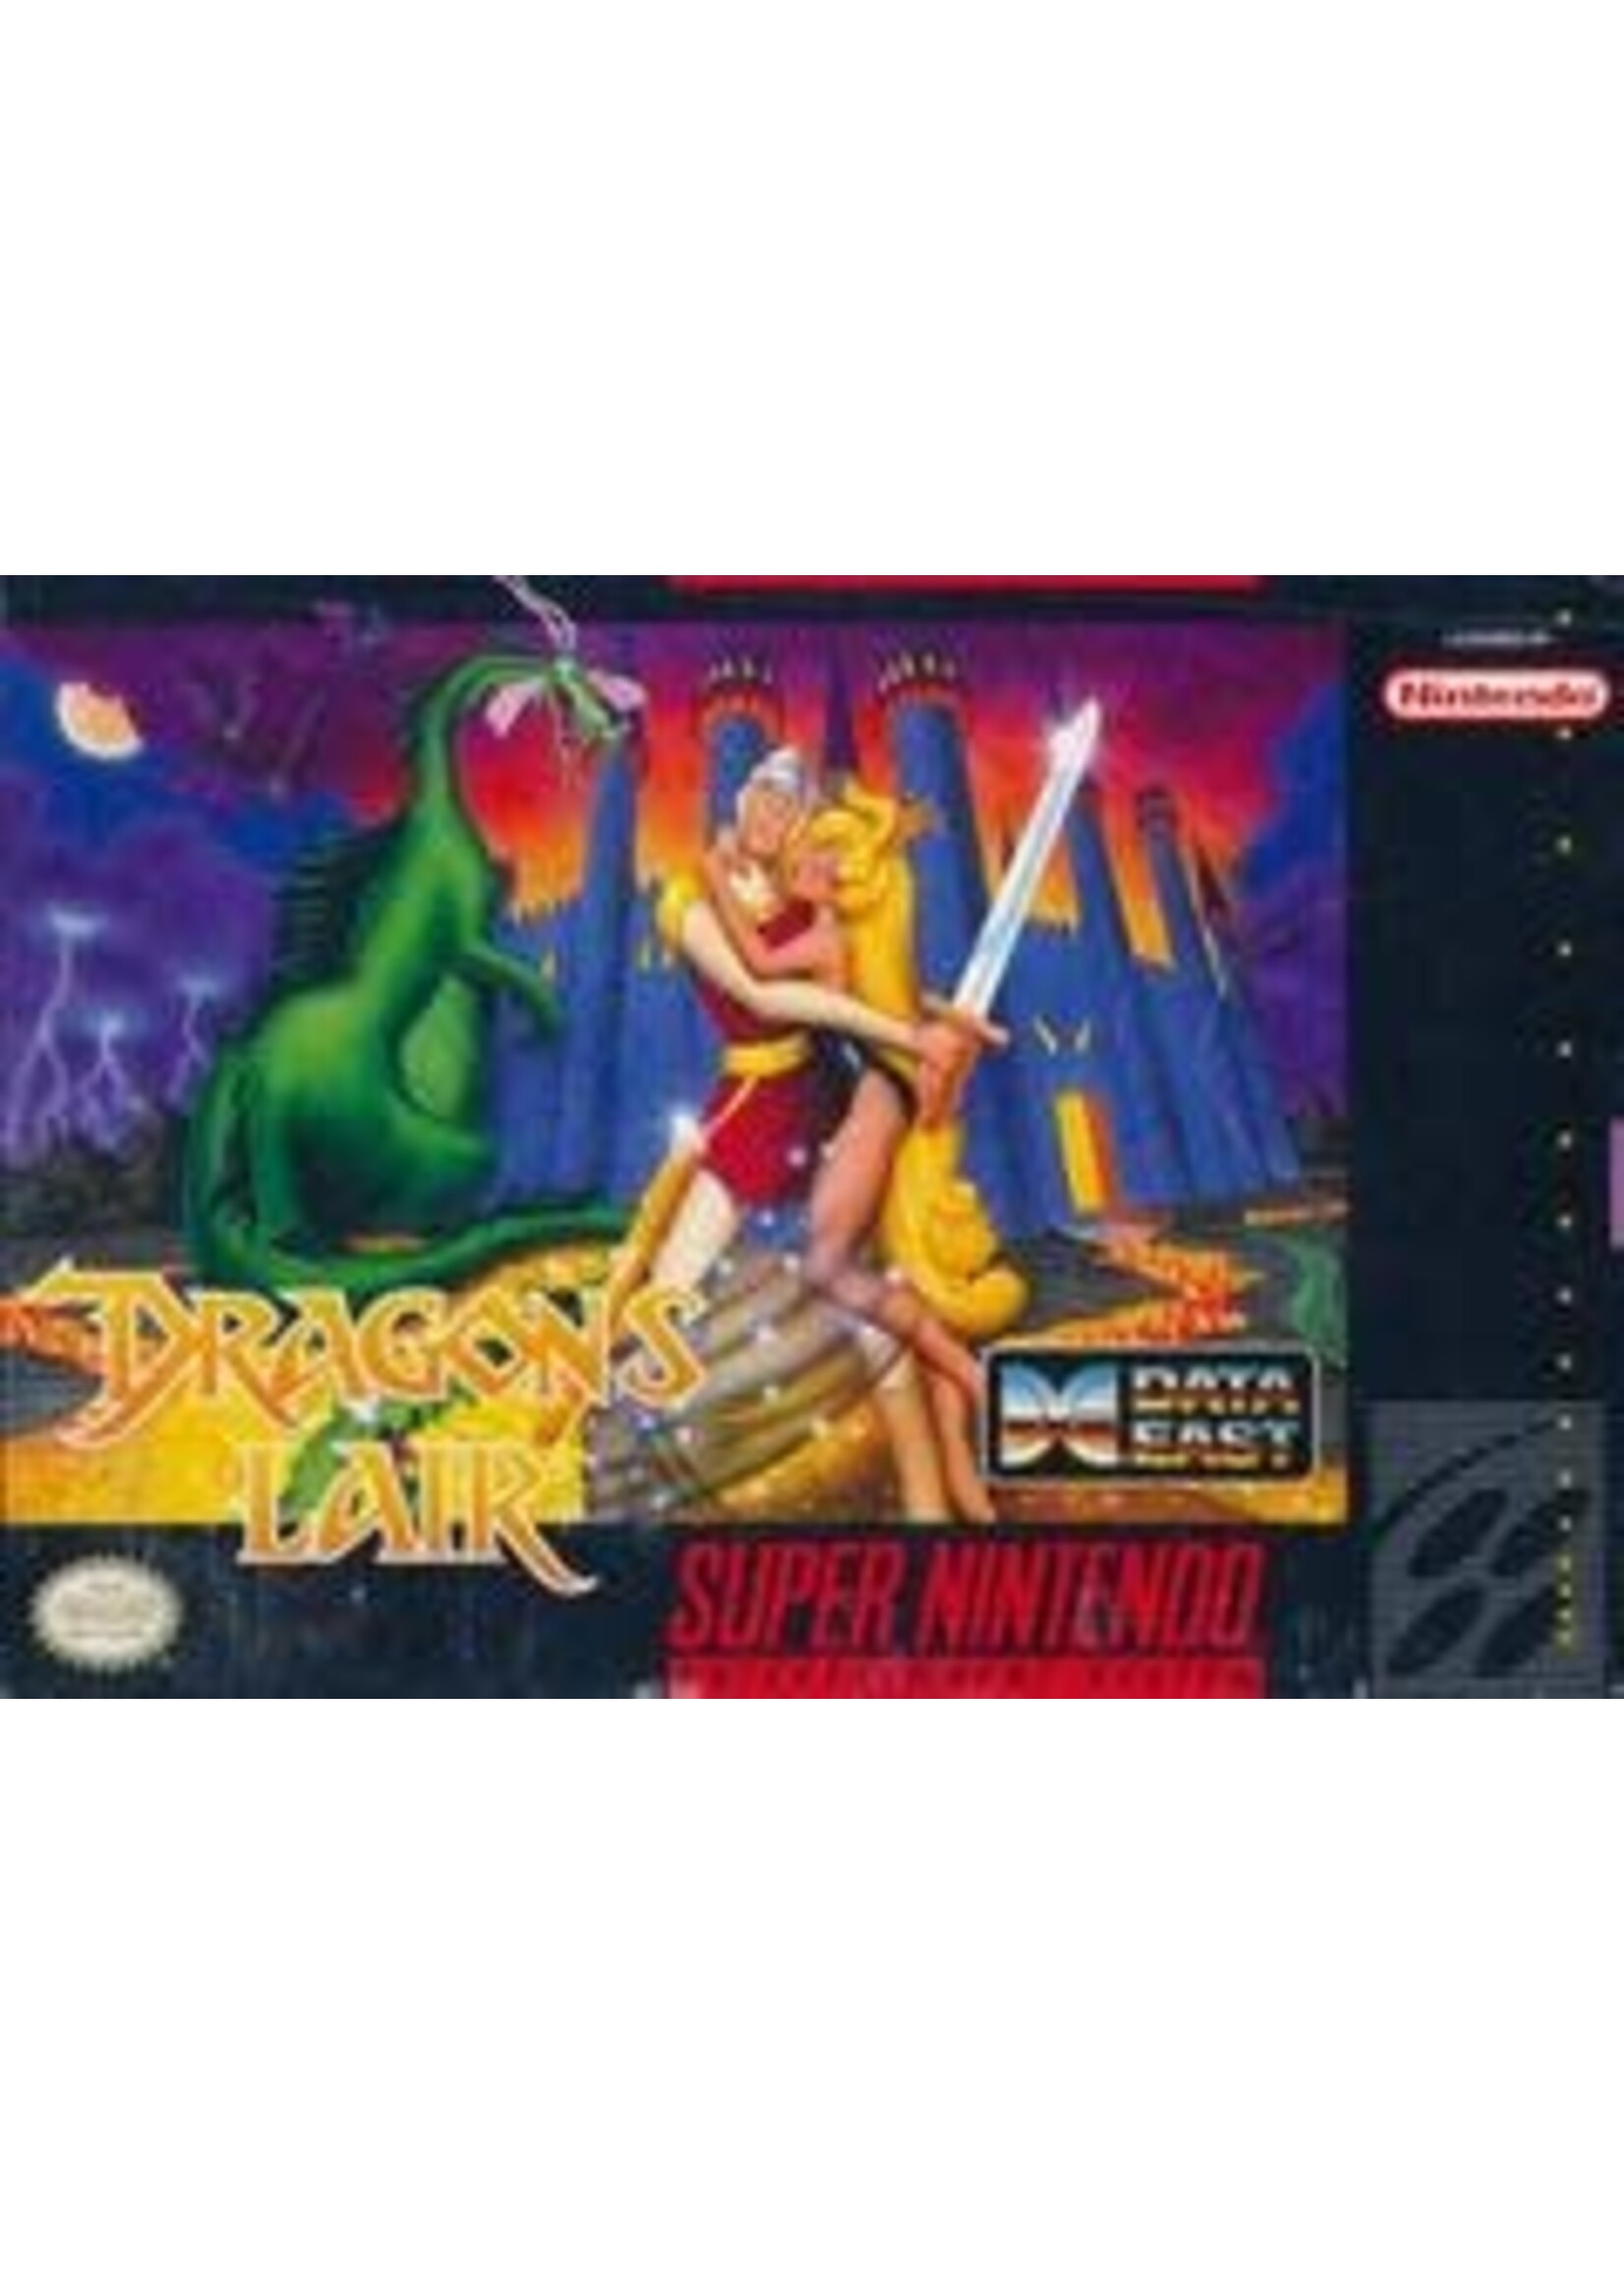 Dragon's Lair Super Nintendo CART ONLY